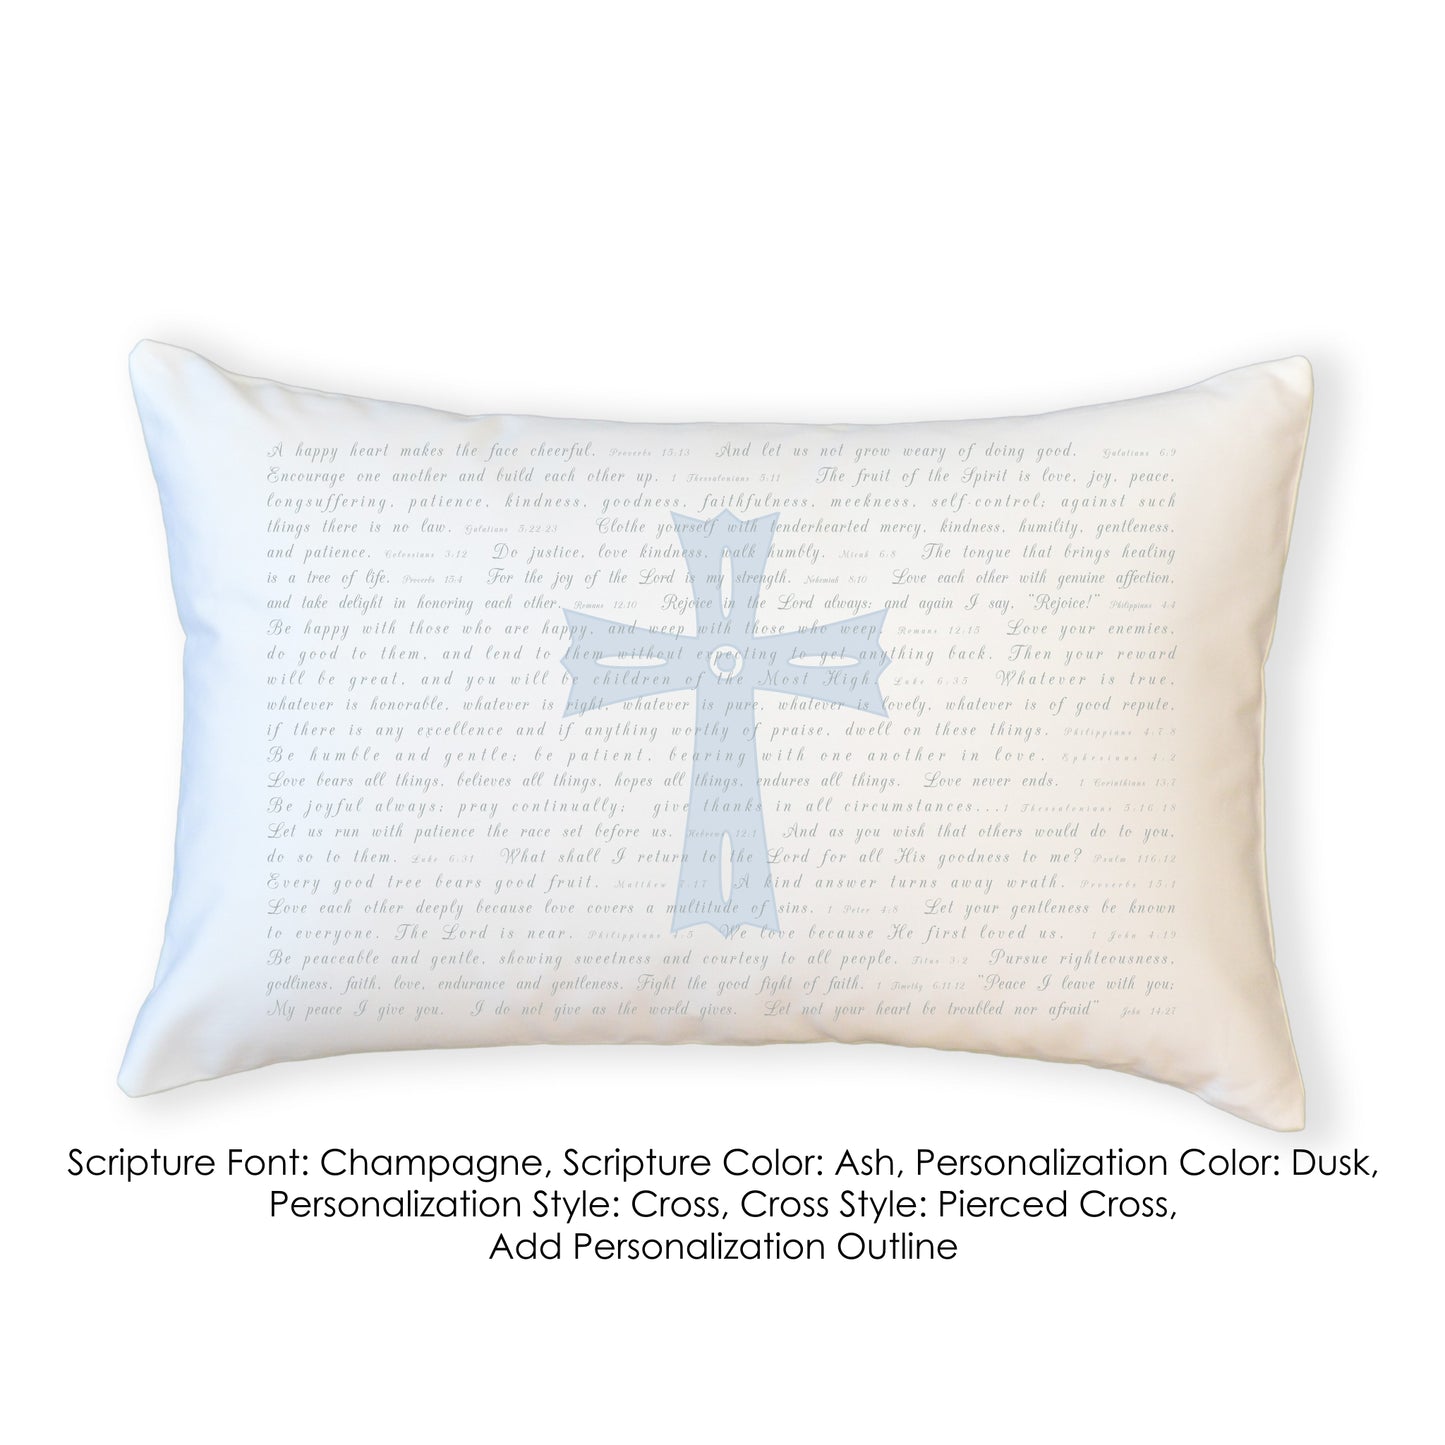 Scripture for the Happy Heart - Boudoir Pillow